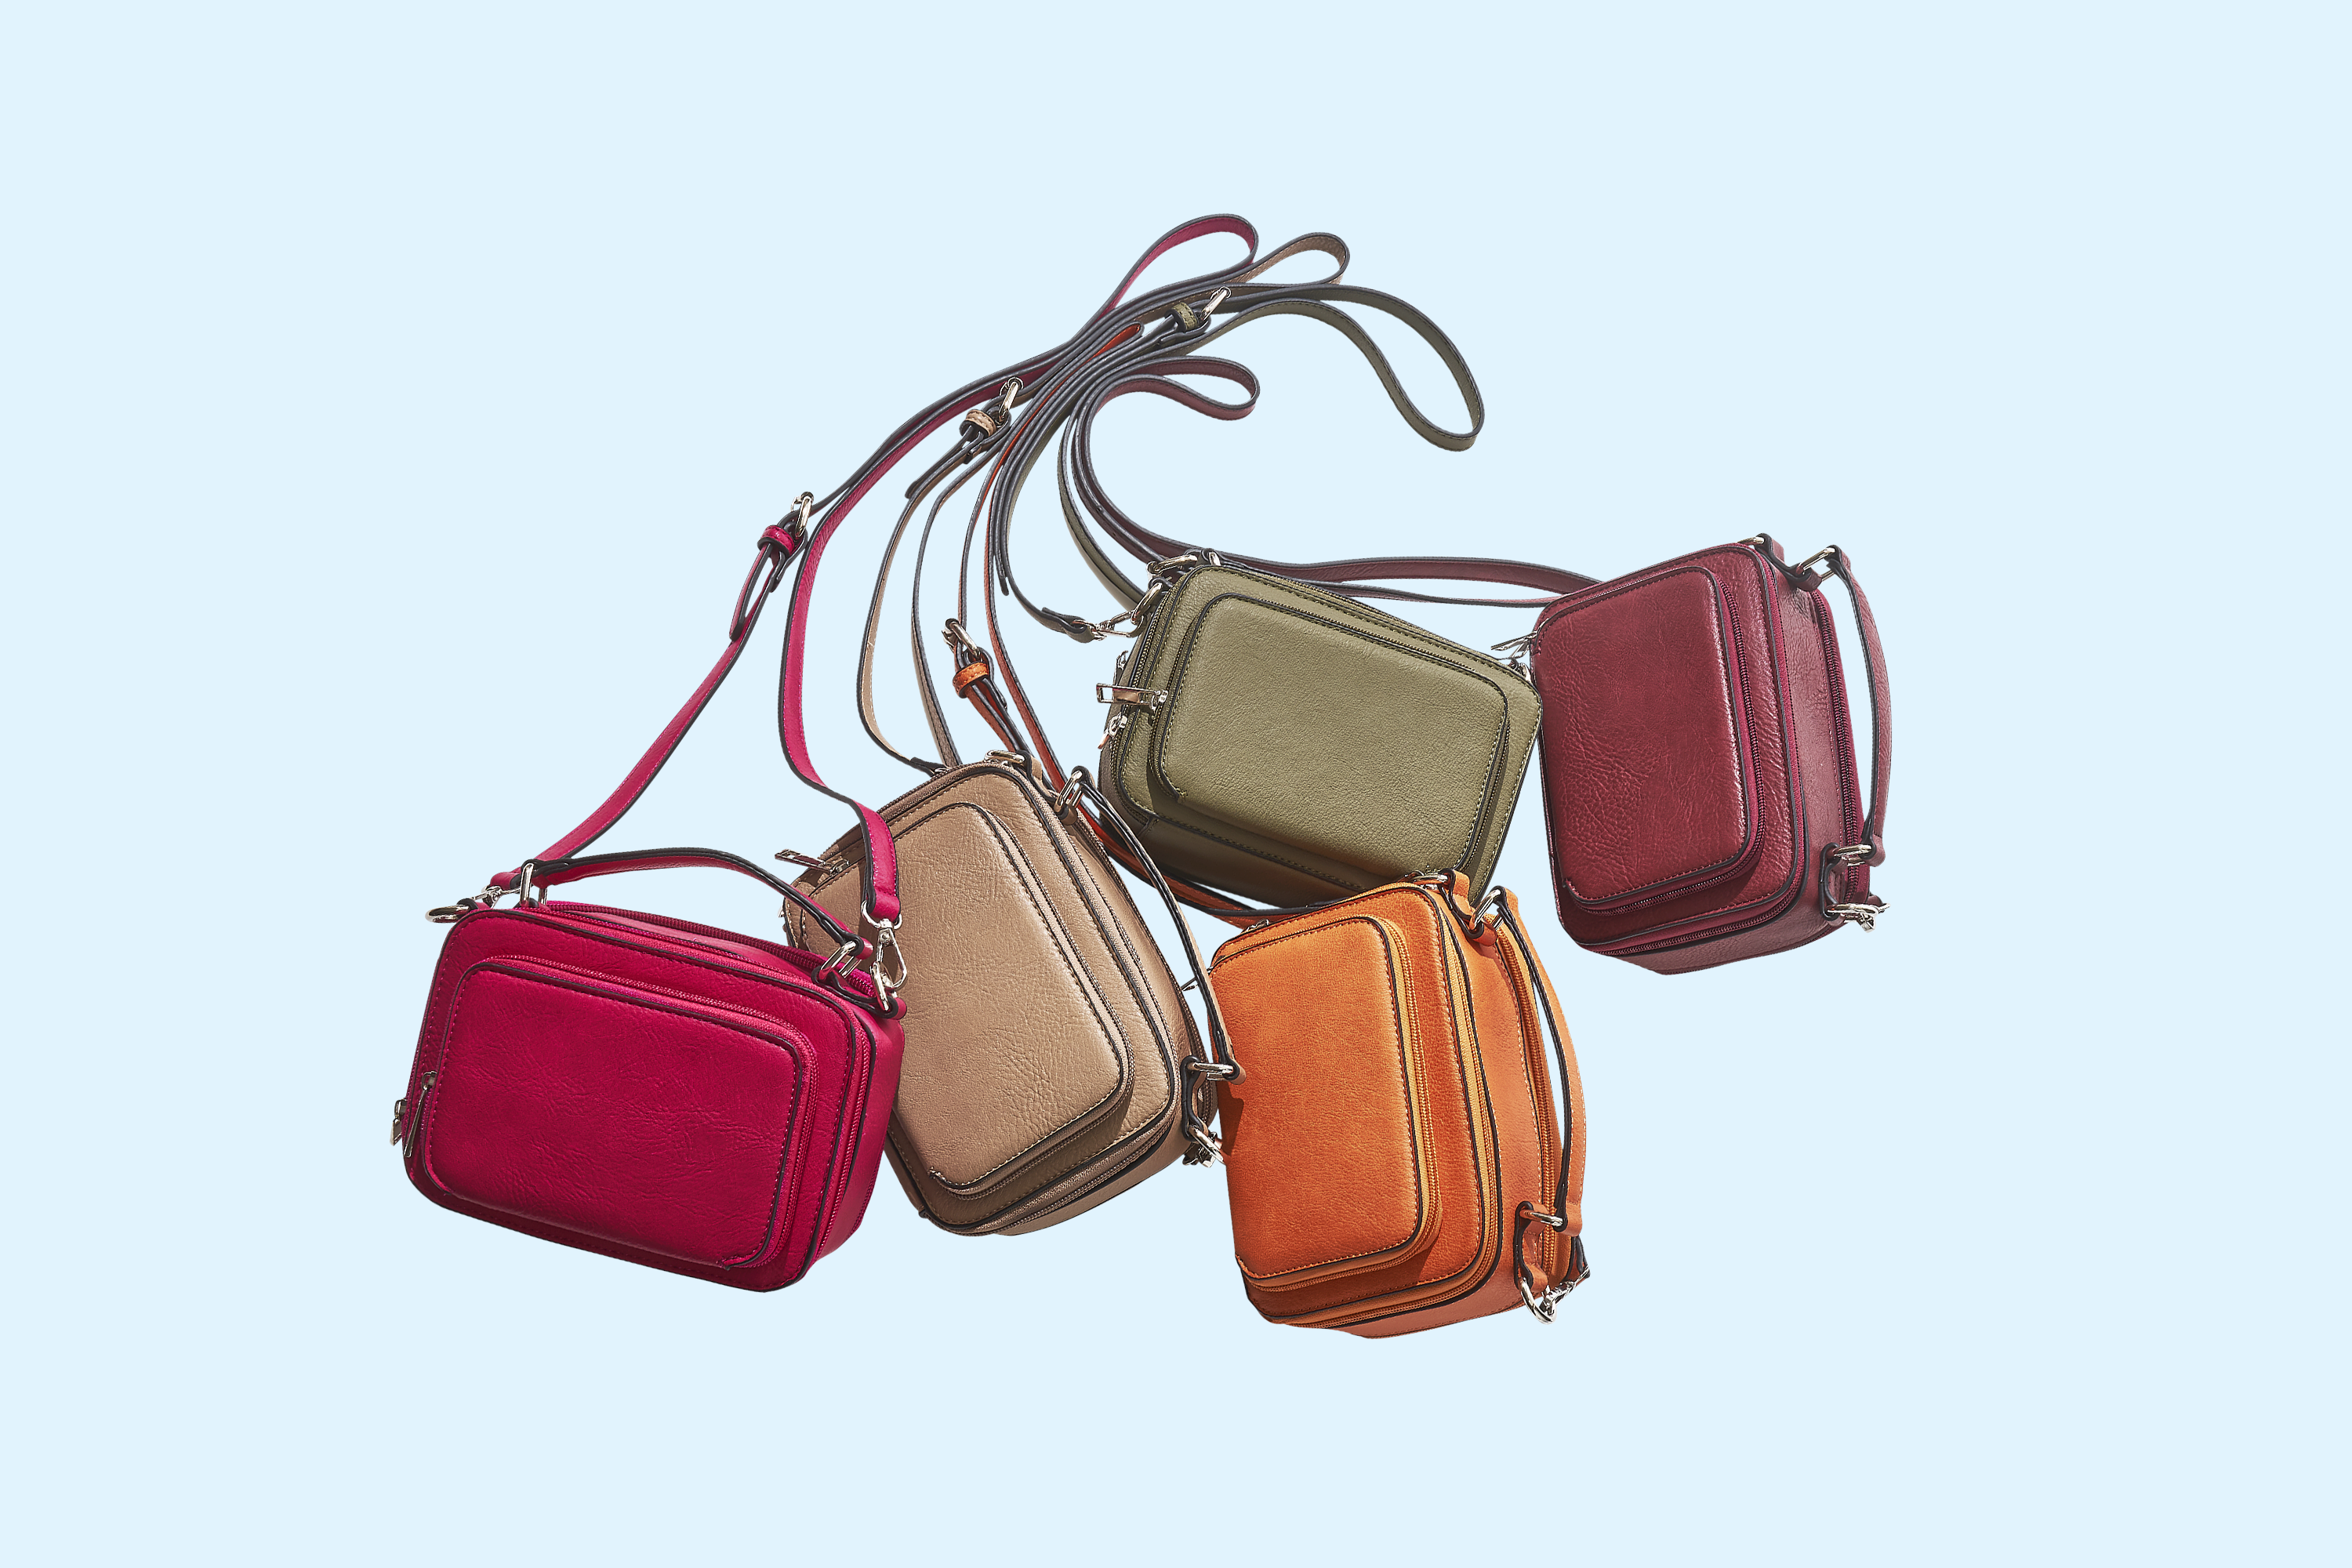 Large Satchel Handbag Purse with Top Handles AFKOMST Shoulder Bags for Women Multi Pocket Soft Leather Hobo Crossbody Bags Messenger Bags with Detachable Shoulder Strap 